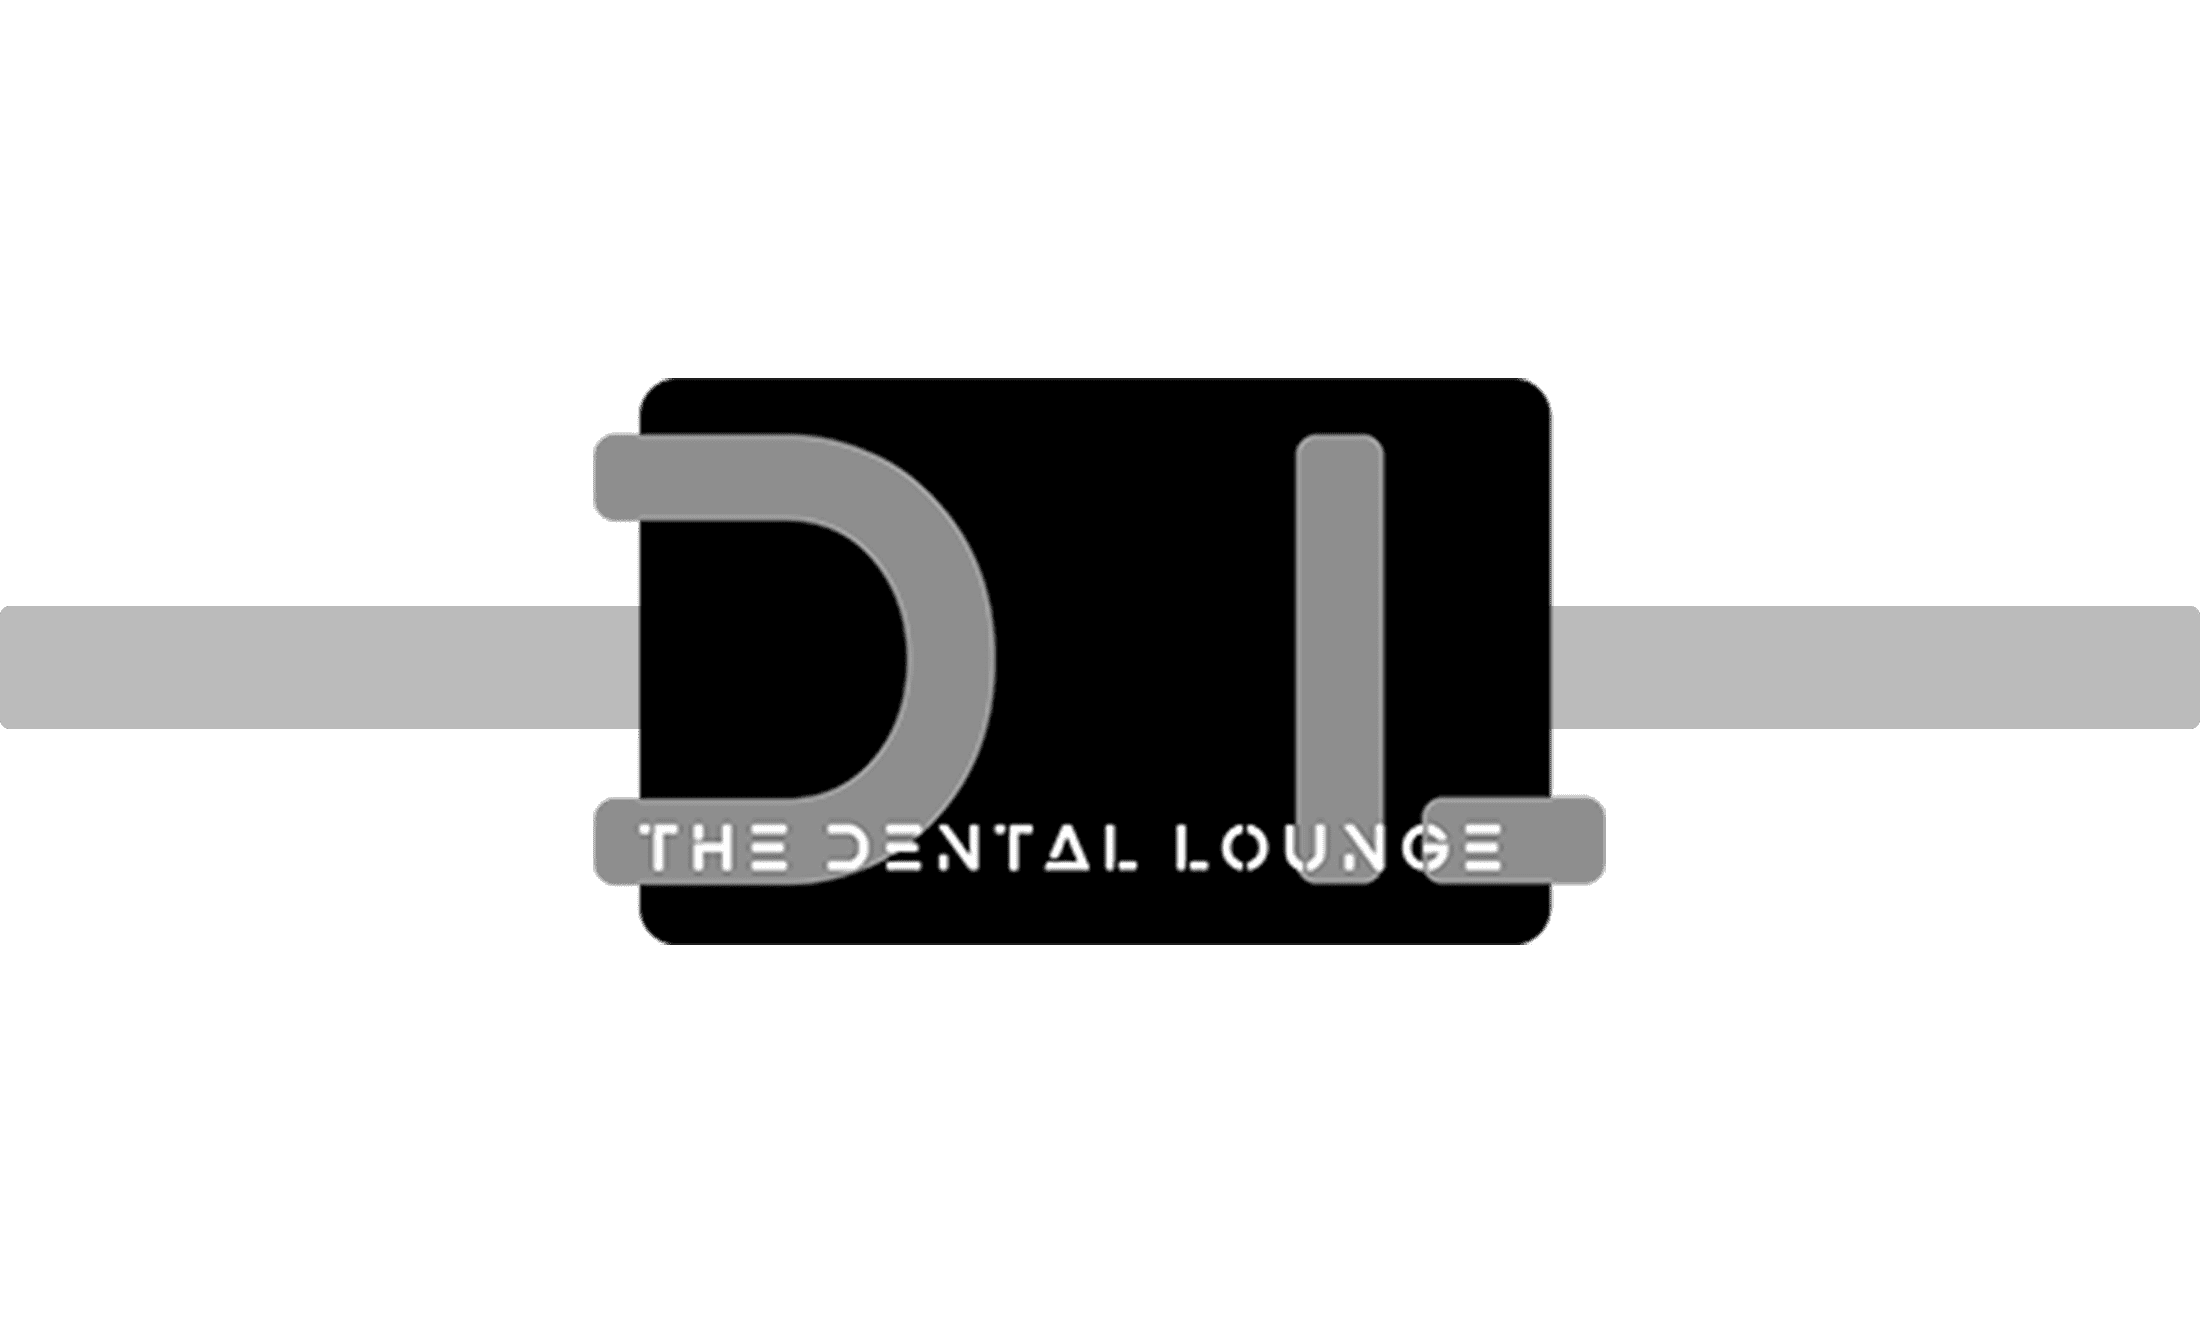 The Dental Lounge logo line through